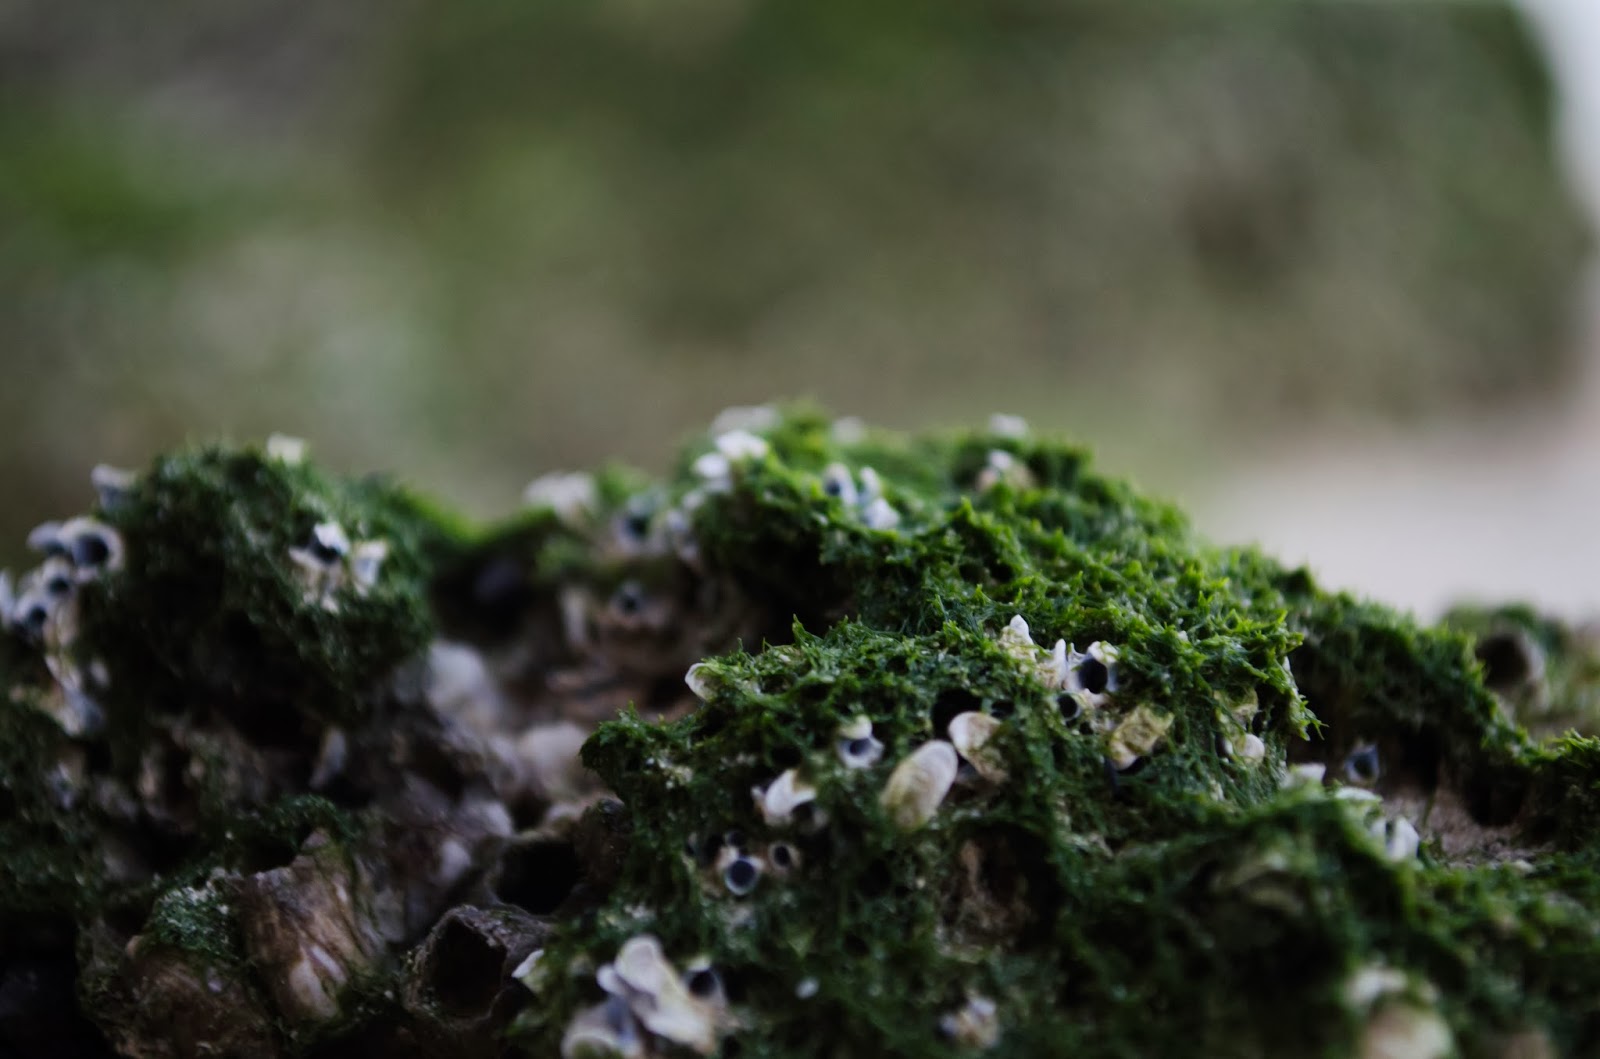 Green fungus on a Mangroves Rock - Photo by Adham Al Oka